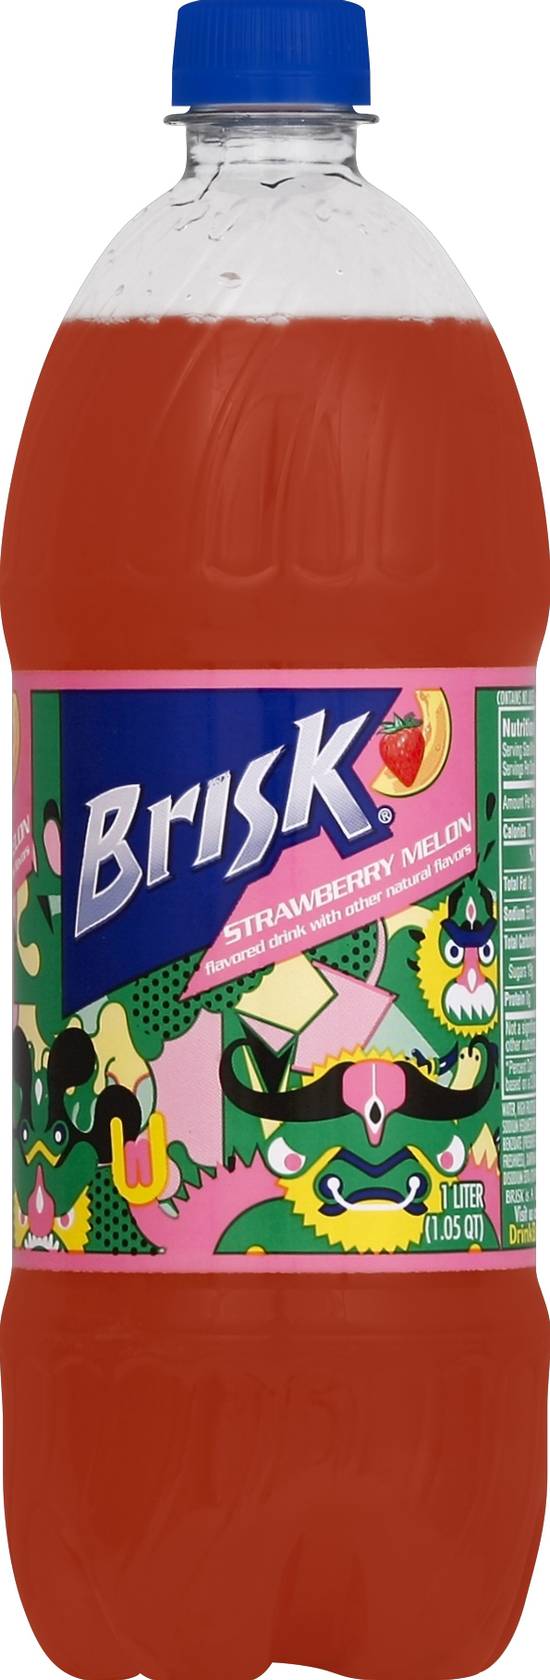 Brisk Iced Tea (1.05 qt) (strawberry -melon)